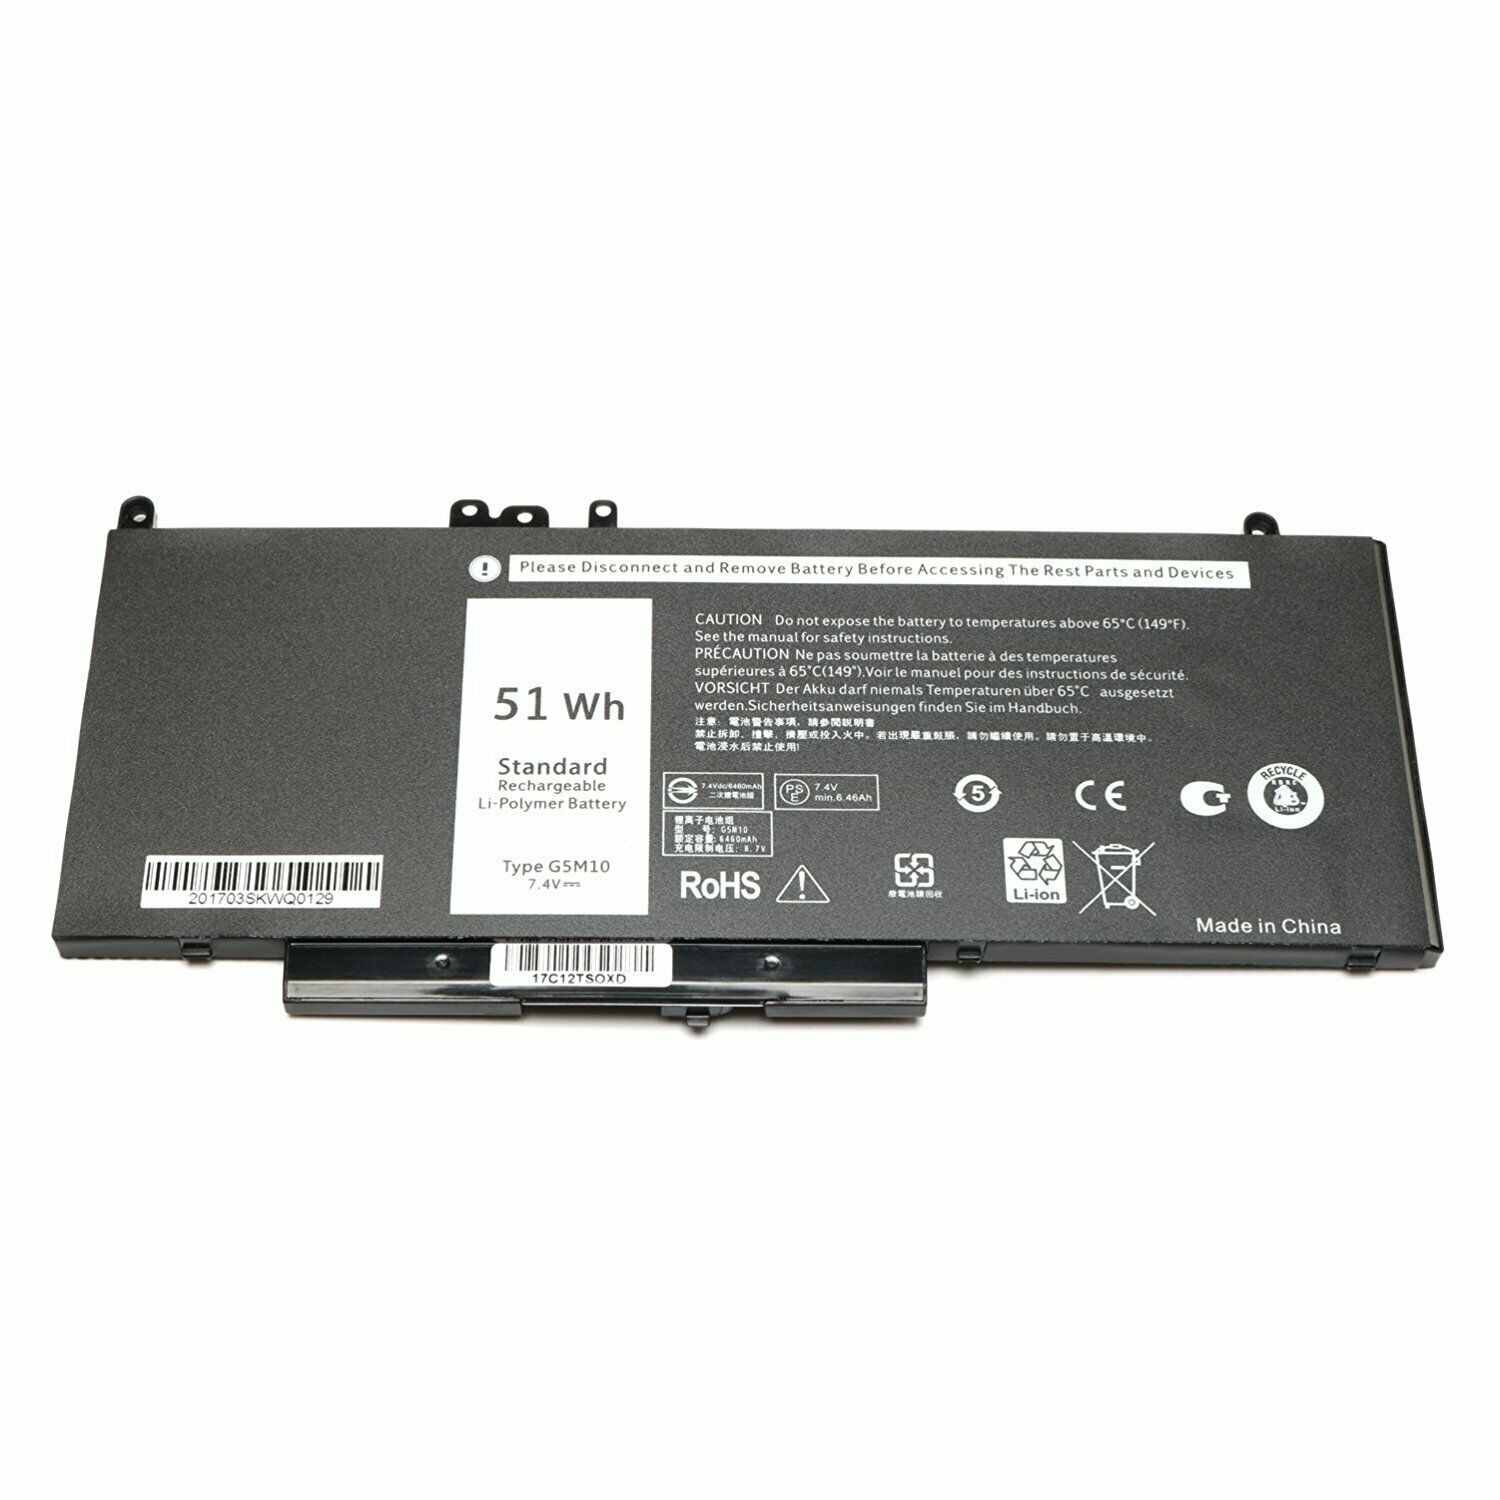 51Wh G5M10 Dell Latitude E5250 E5270 E5450 E5550 WYJC2 8V5GX F5WW5 kompatybilny bateria - Kliknij obrazek, aby zamkn±æ